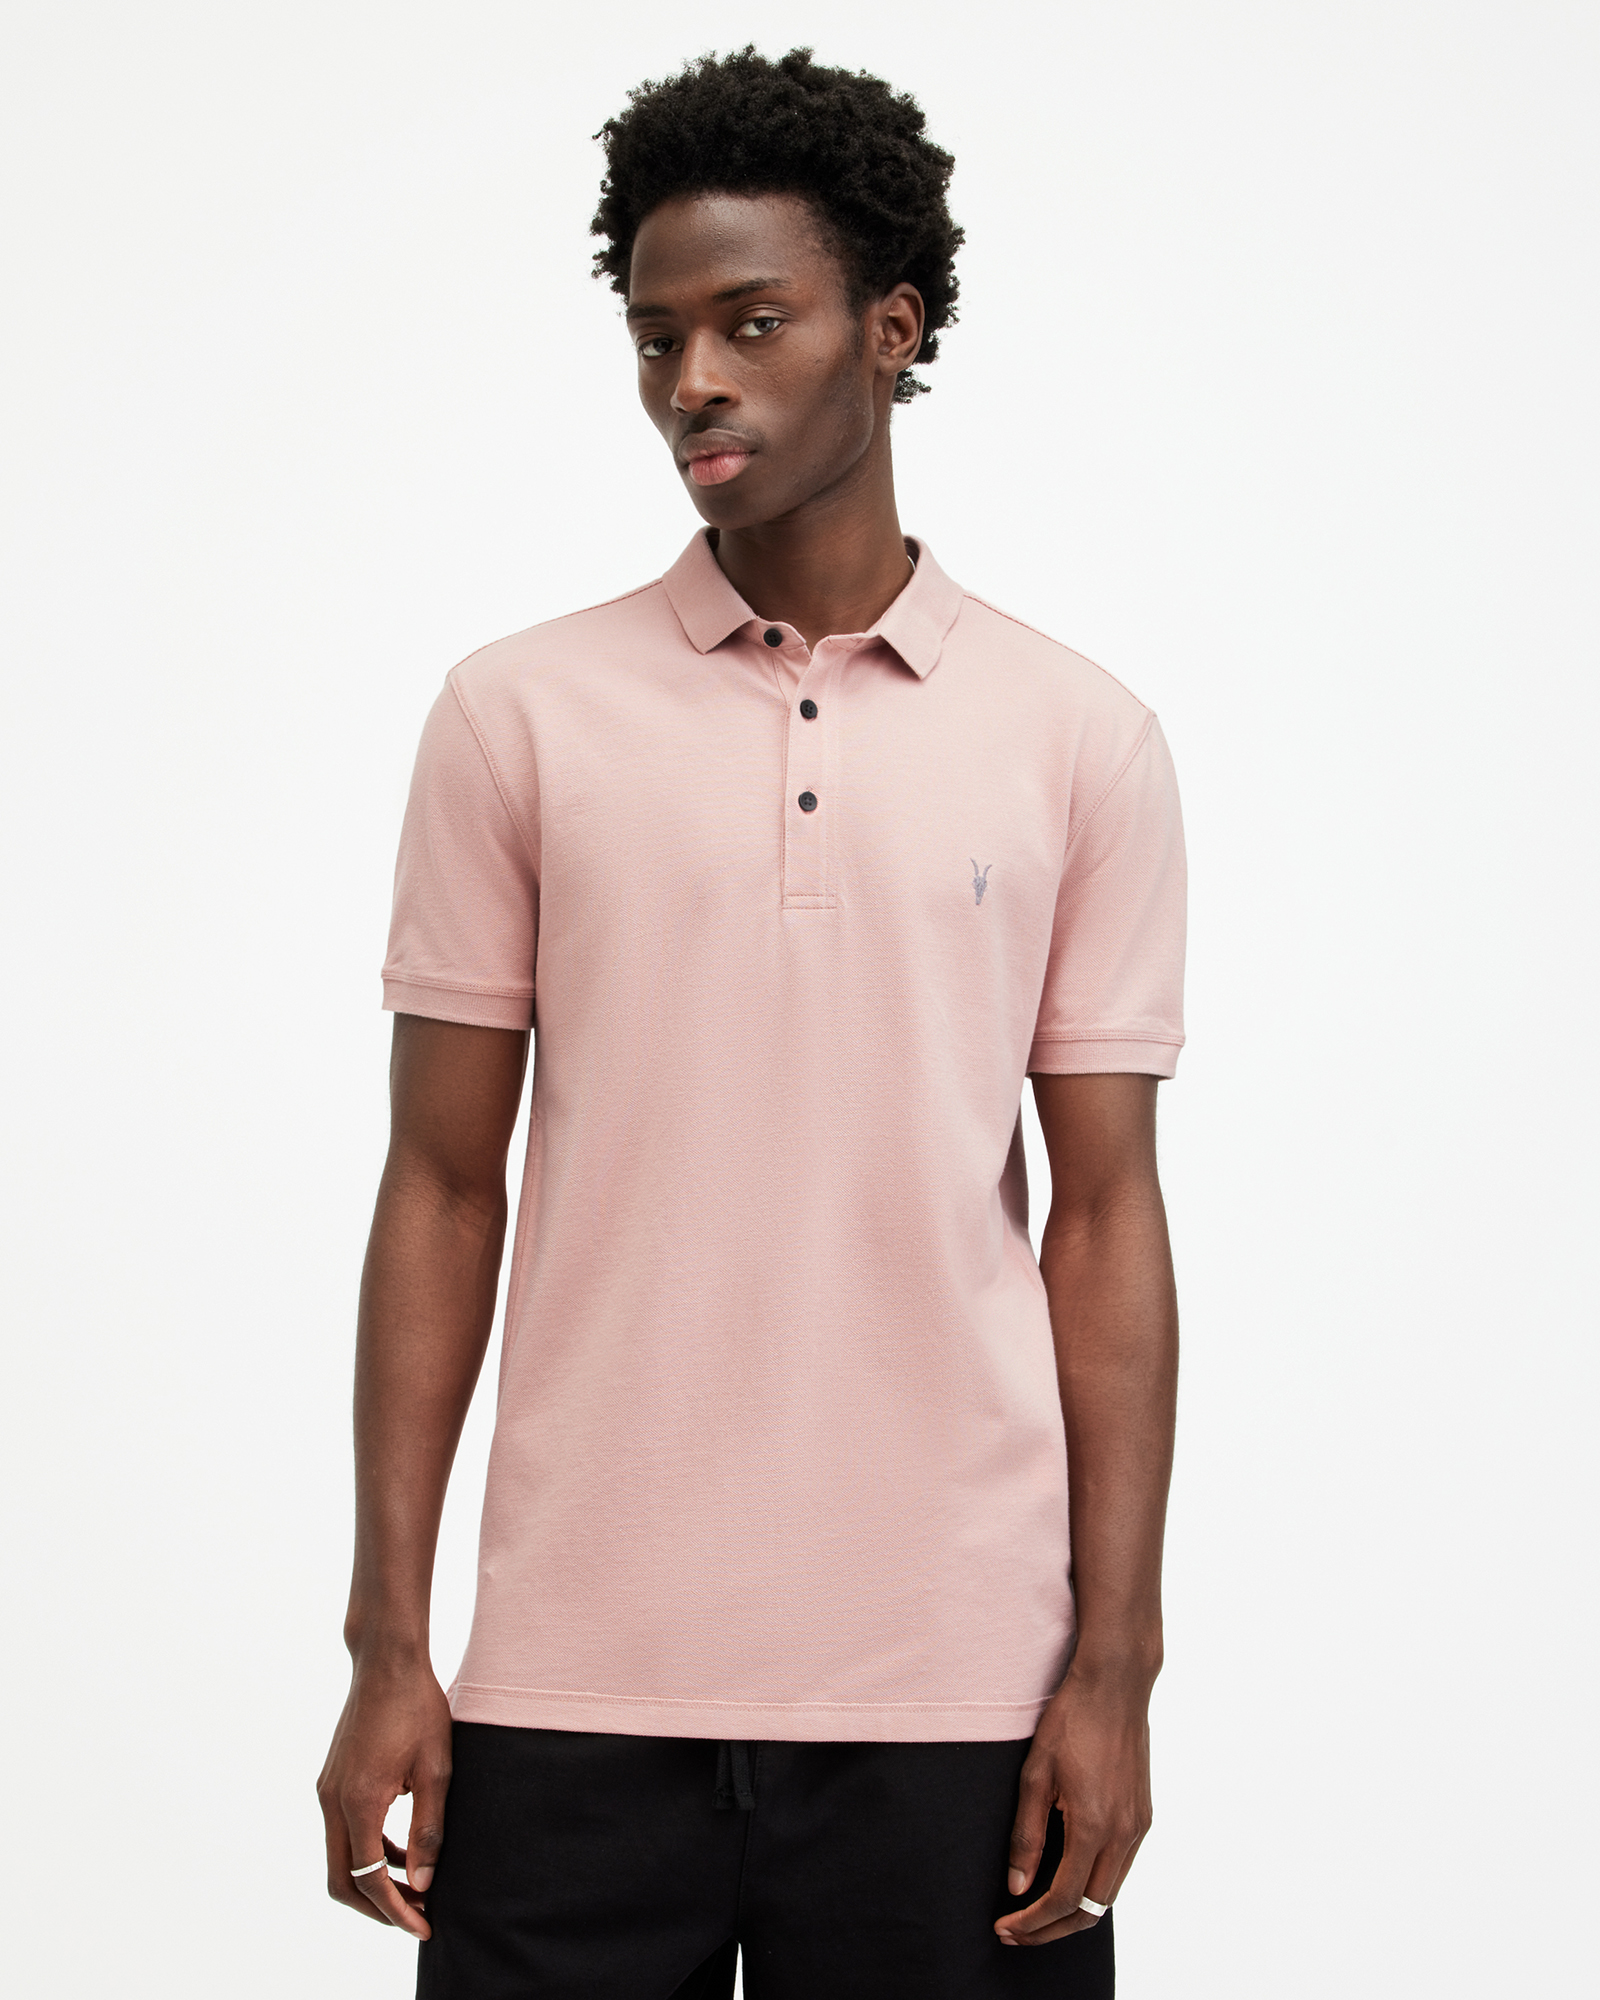 AllSaints Reform Short Sleeve Polo Shirt,, BRAMBLE PINK